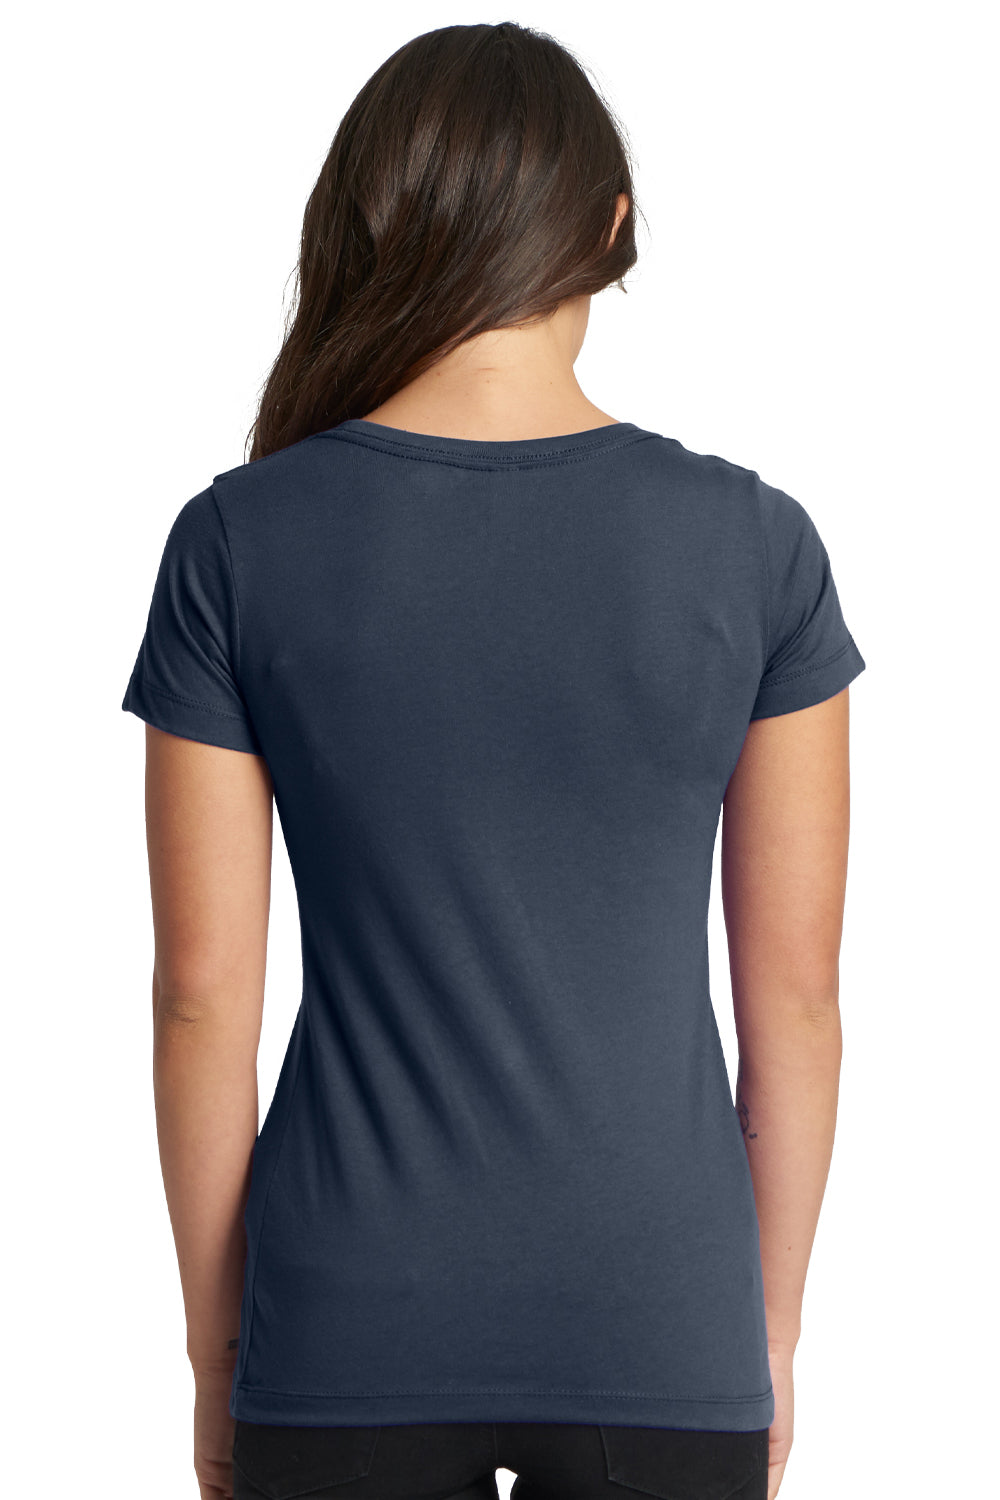 Next Level N1510 Womens Ideal Jersey Short Sleeve Crewneck T-Shirt Indigo Blue Back